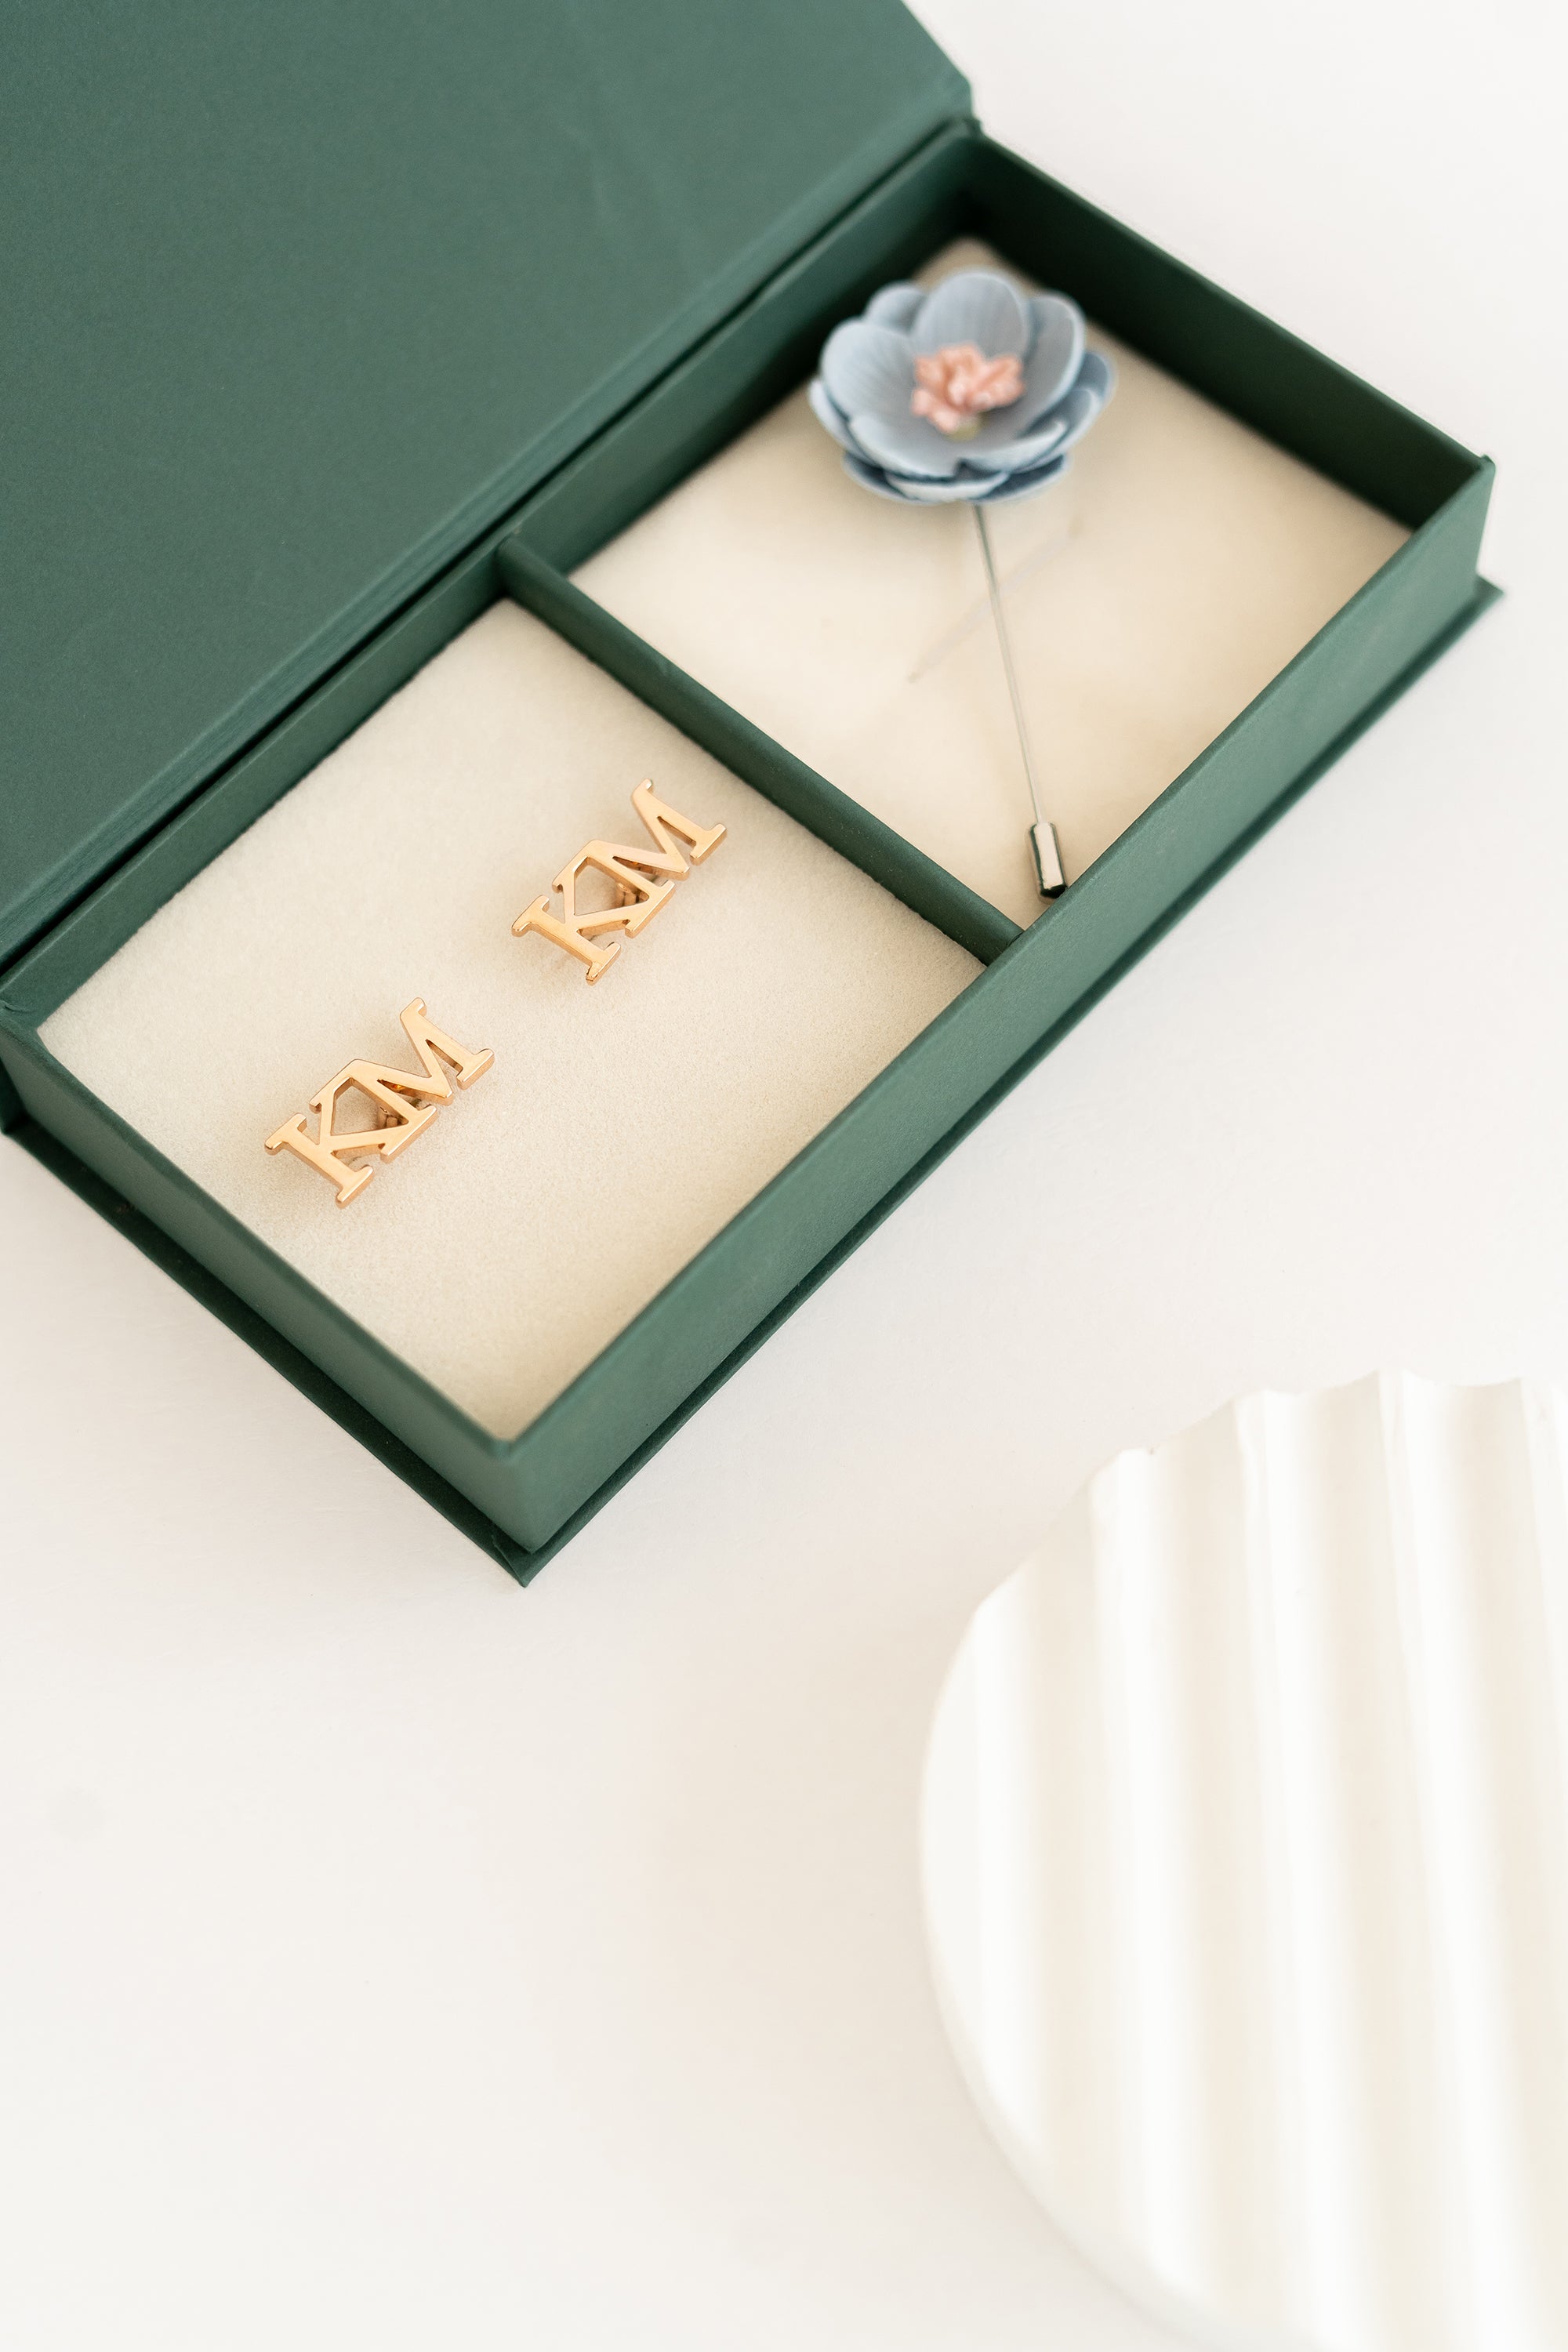 Personalised Cufflink Gift Box